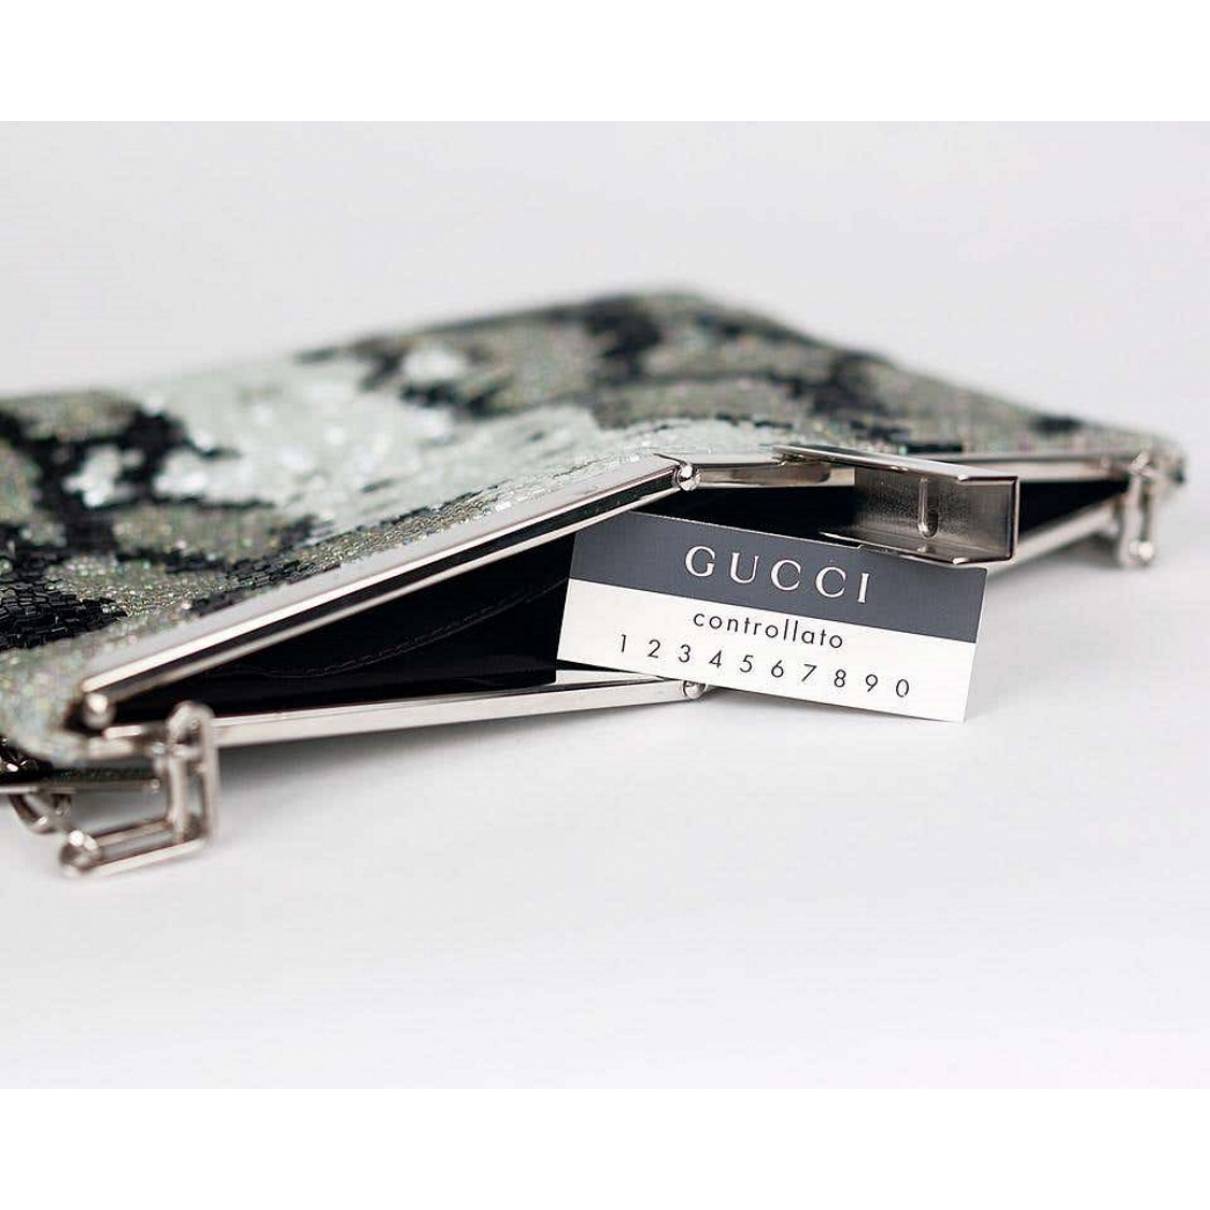 Buy Gucci Guccy clutch handbag online